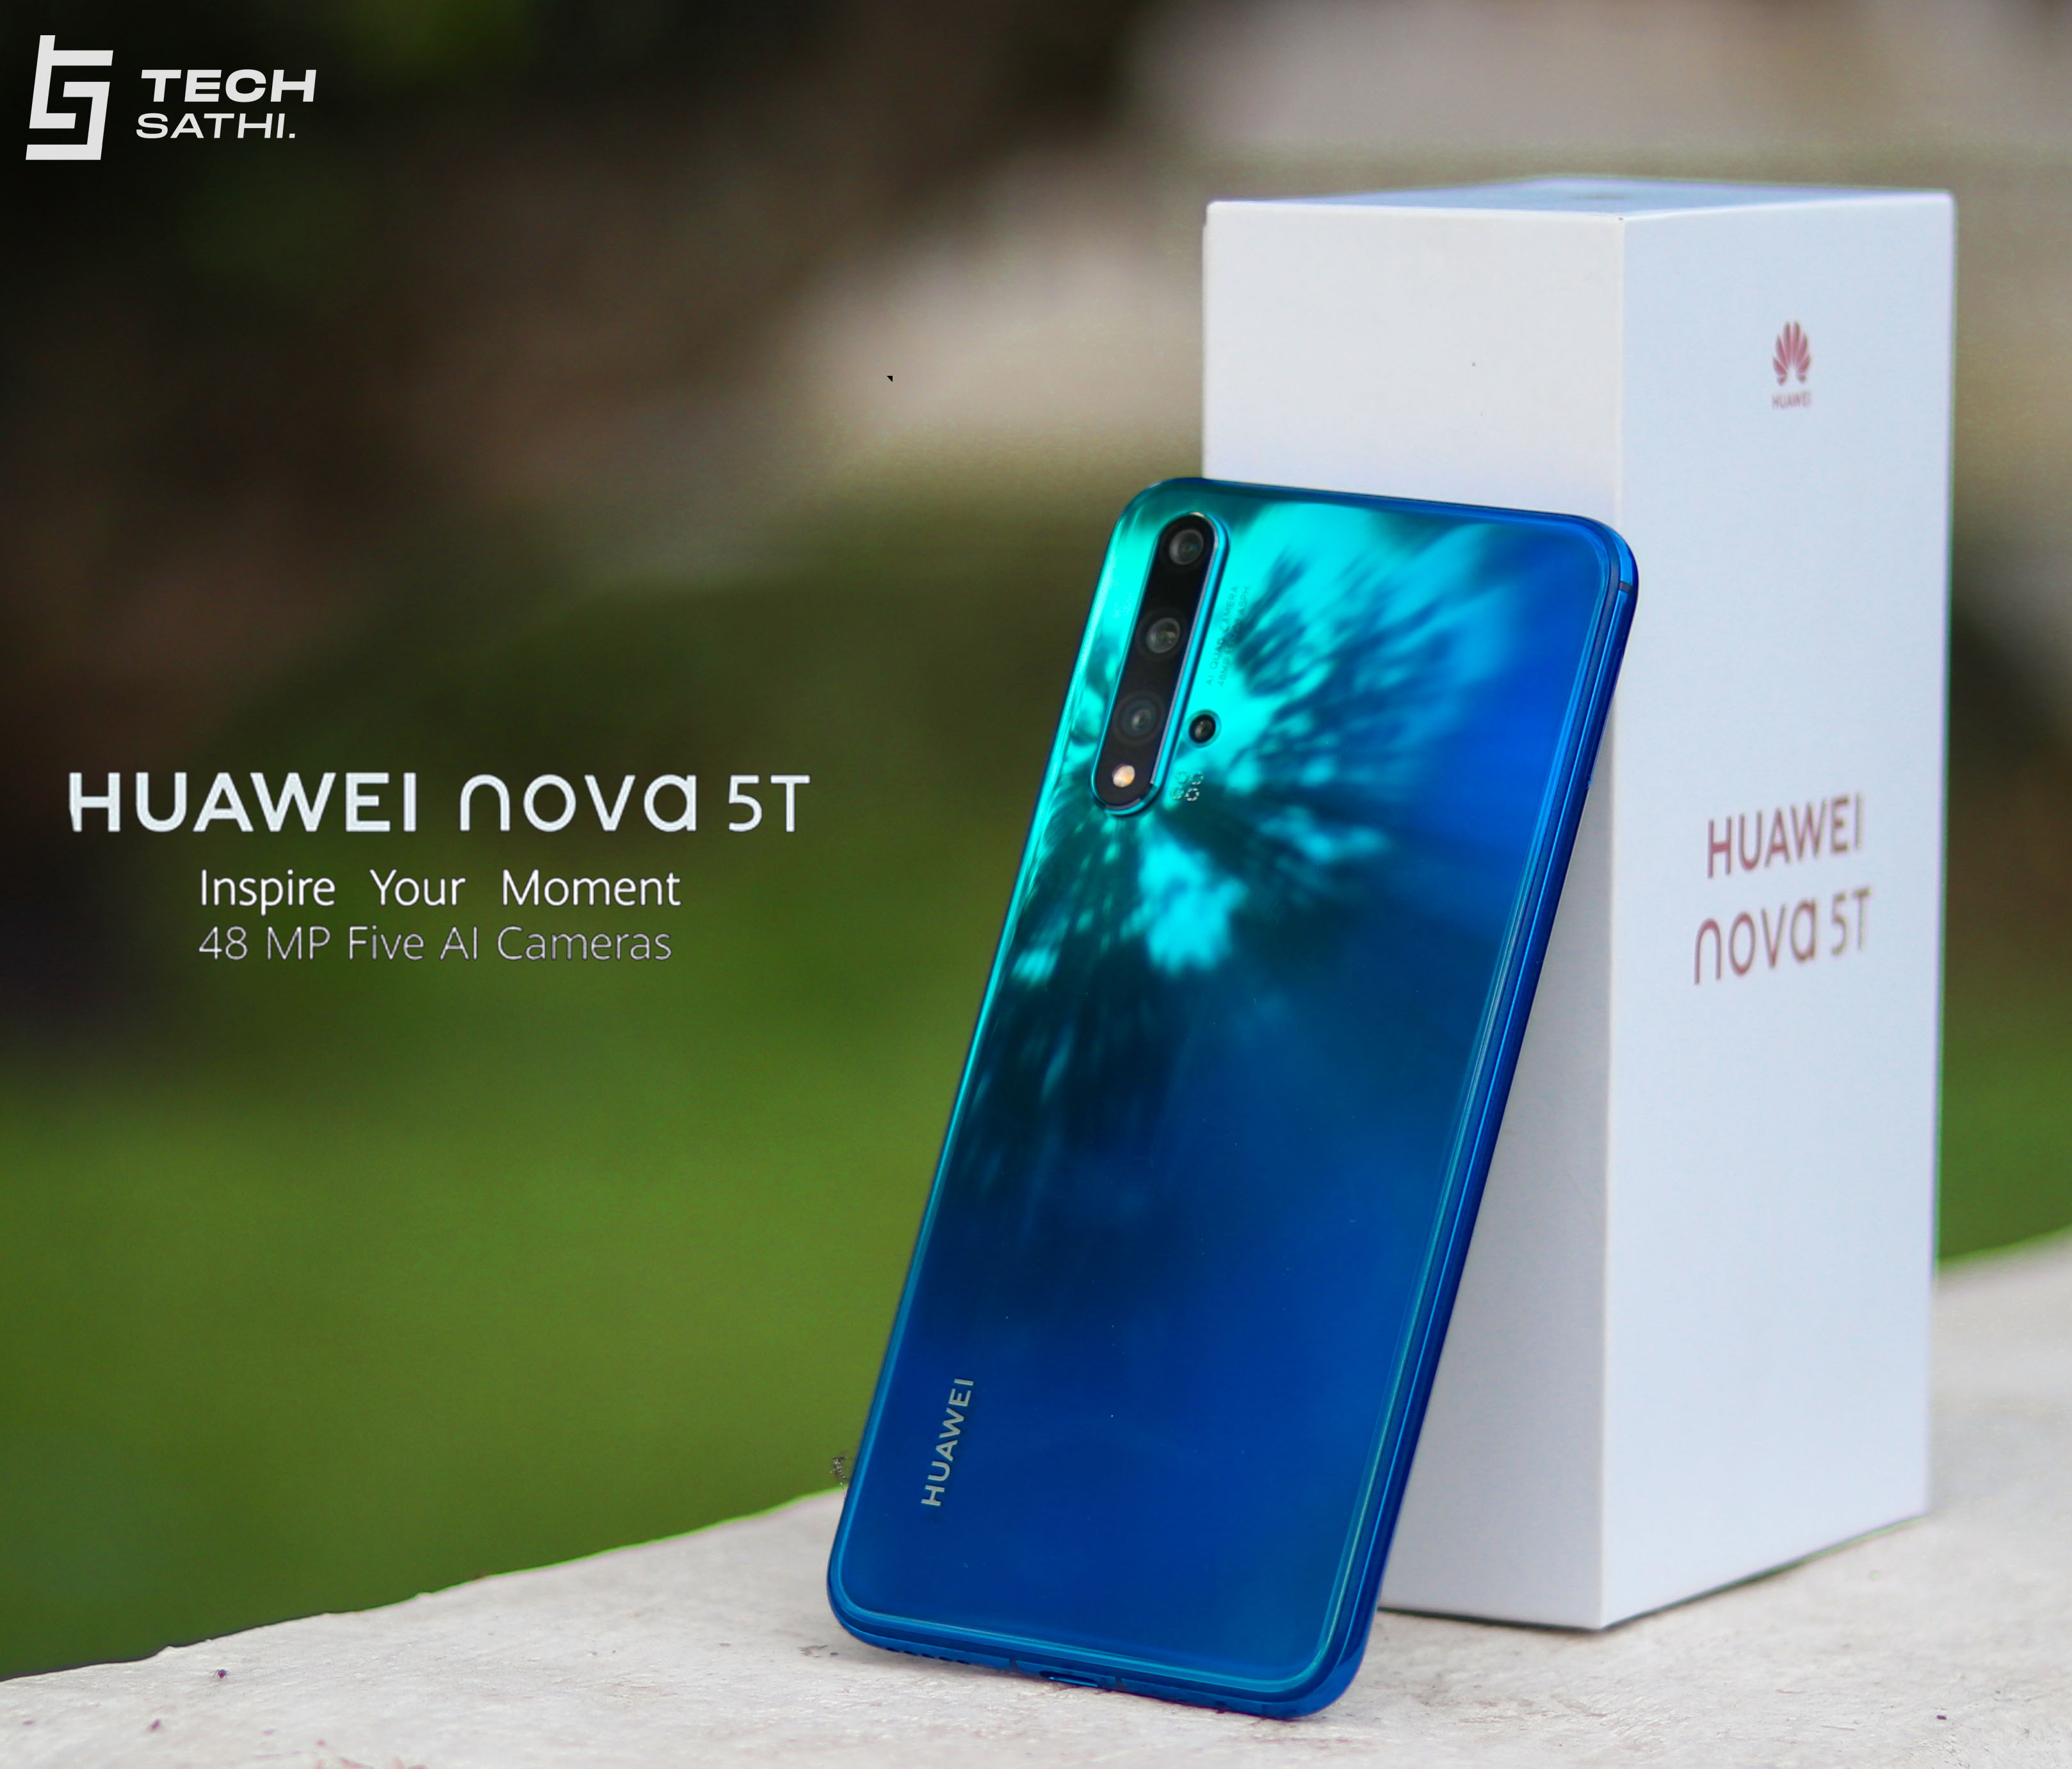 Huawei Nova 5T Nepal